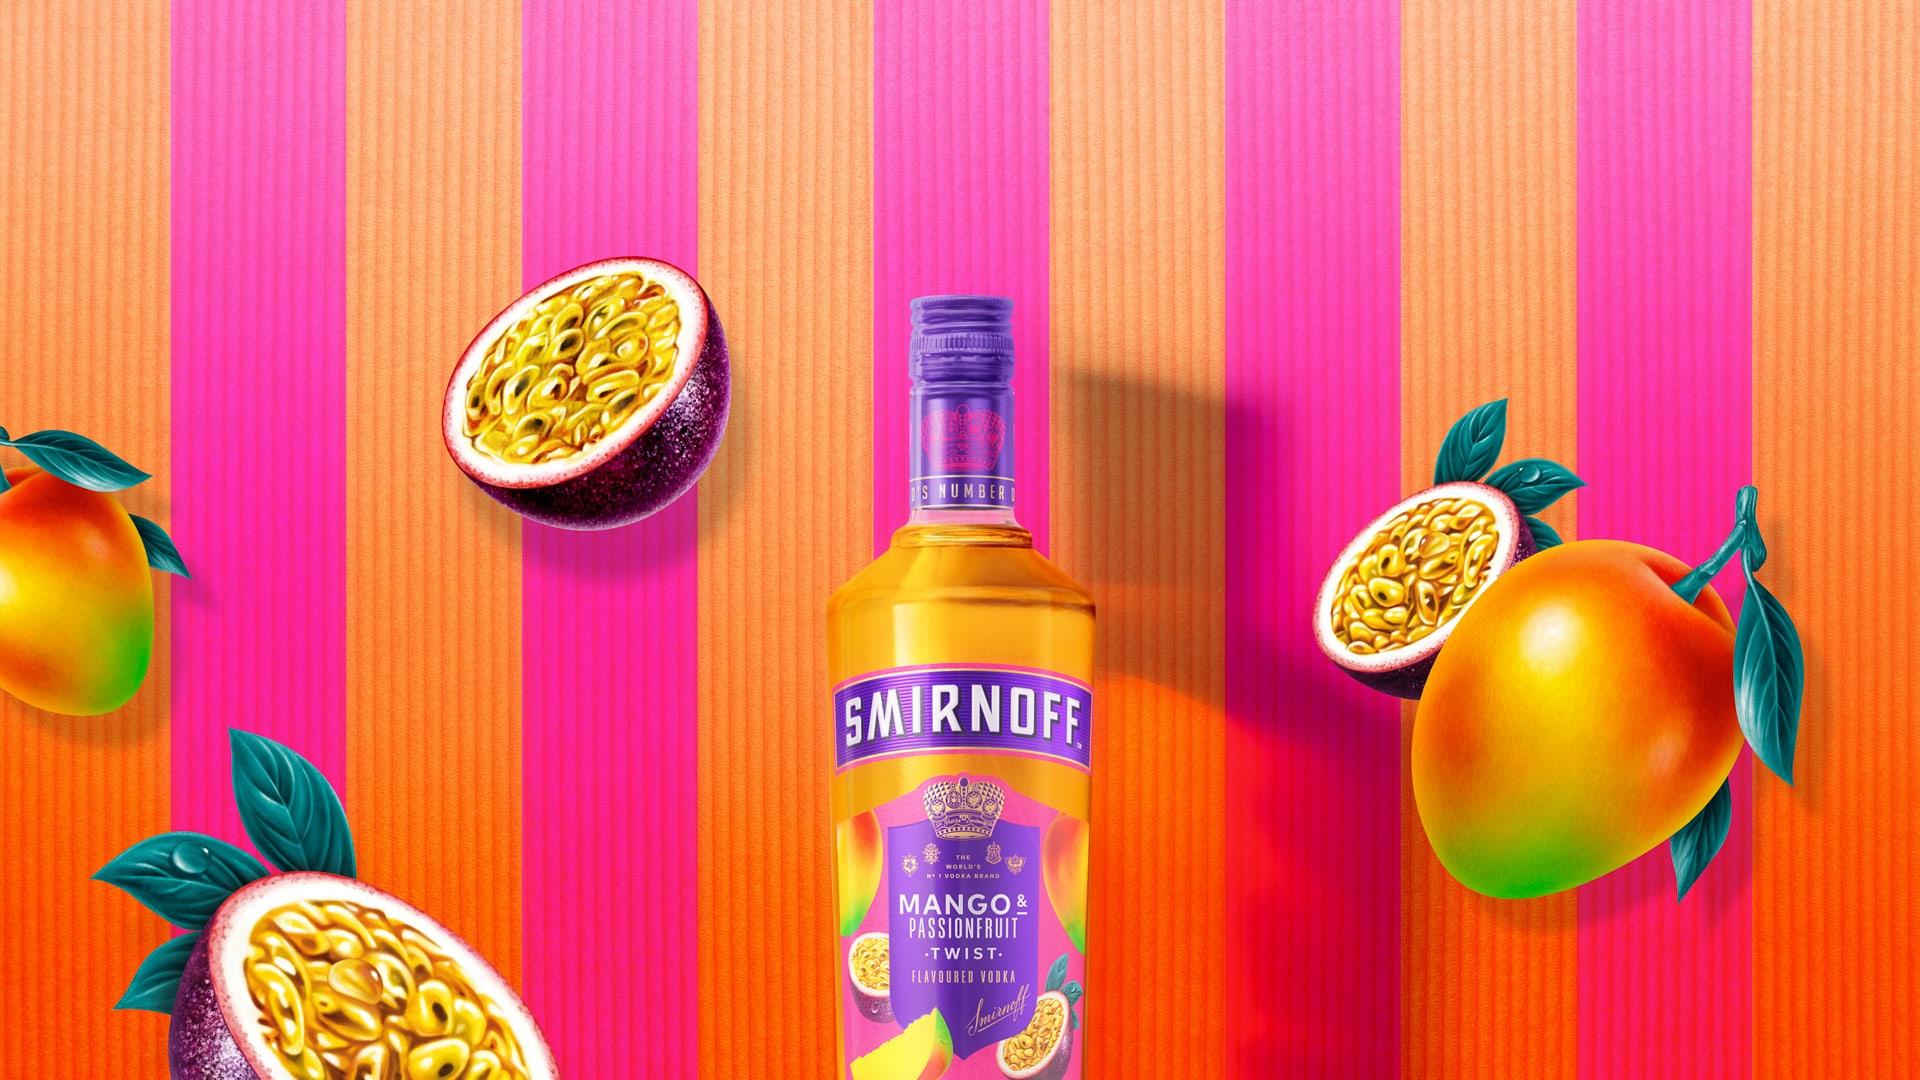 Smirnoff Mango & Passionfruit Twist on a striped background